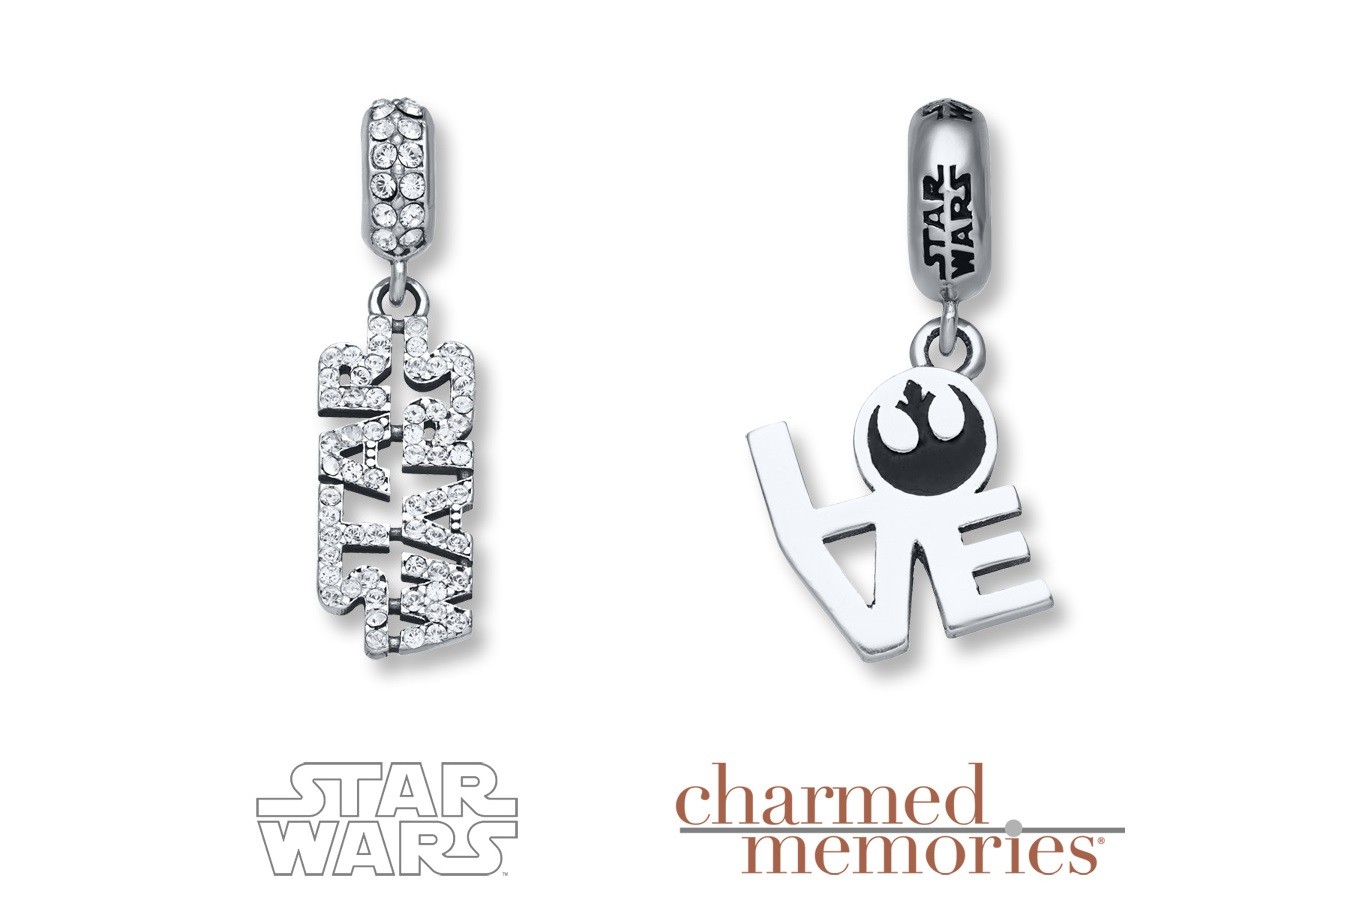 More Kay Jewelers x Star Wars charms